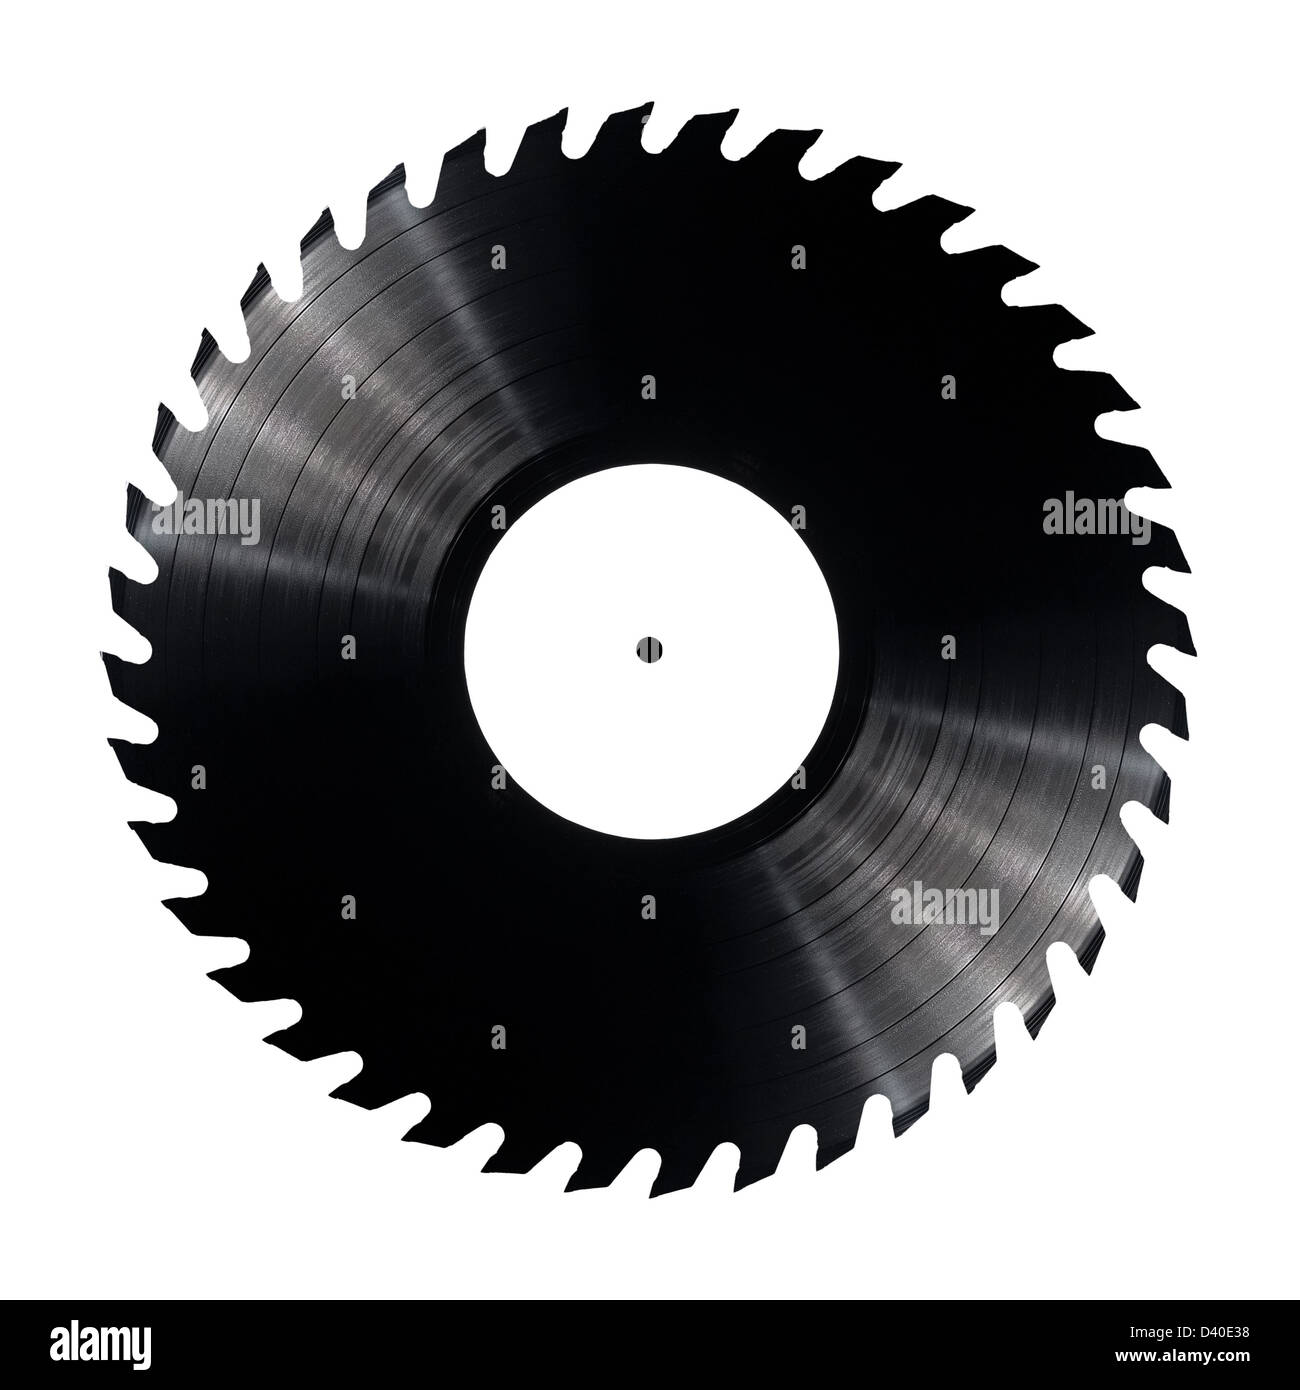 Vinyl record with circular saw blade edges. Stock Photo